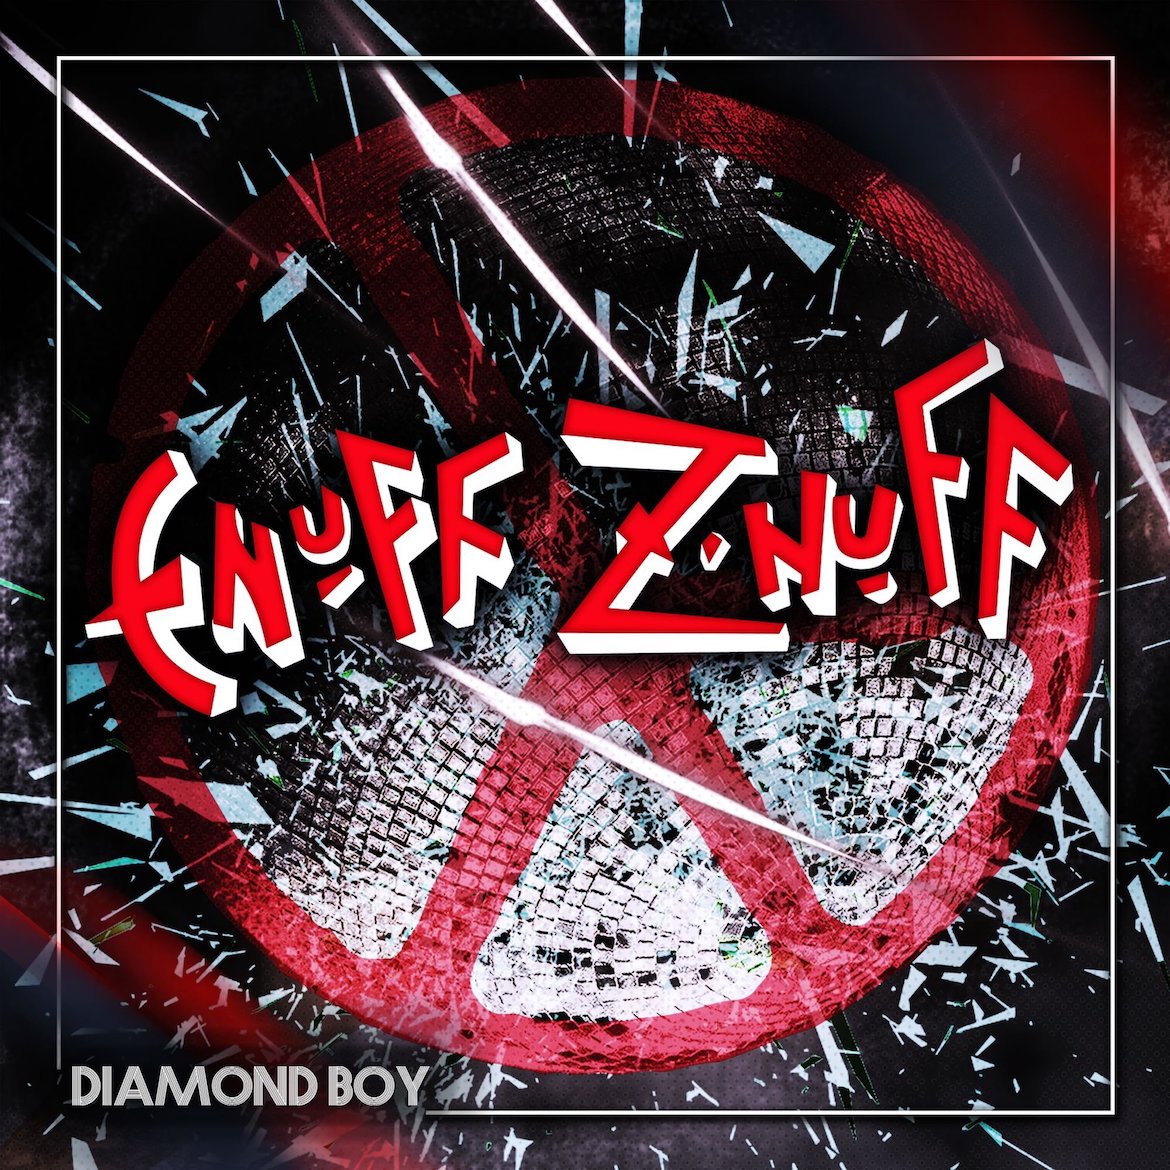 Diamond Boy Album Cover by Snuff Snuff